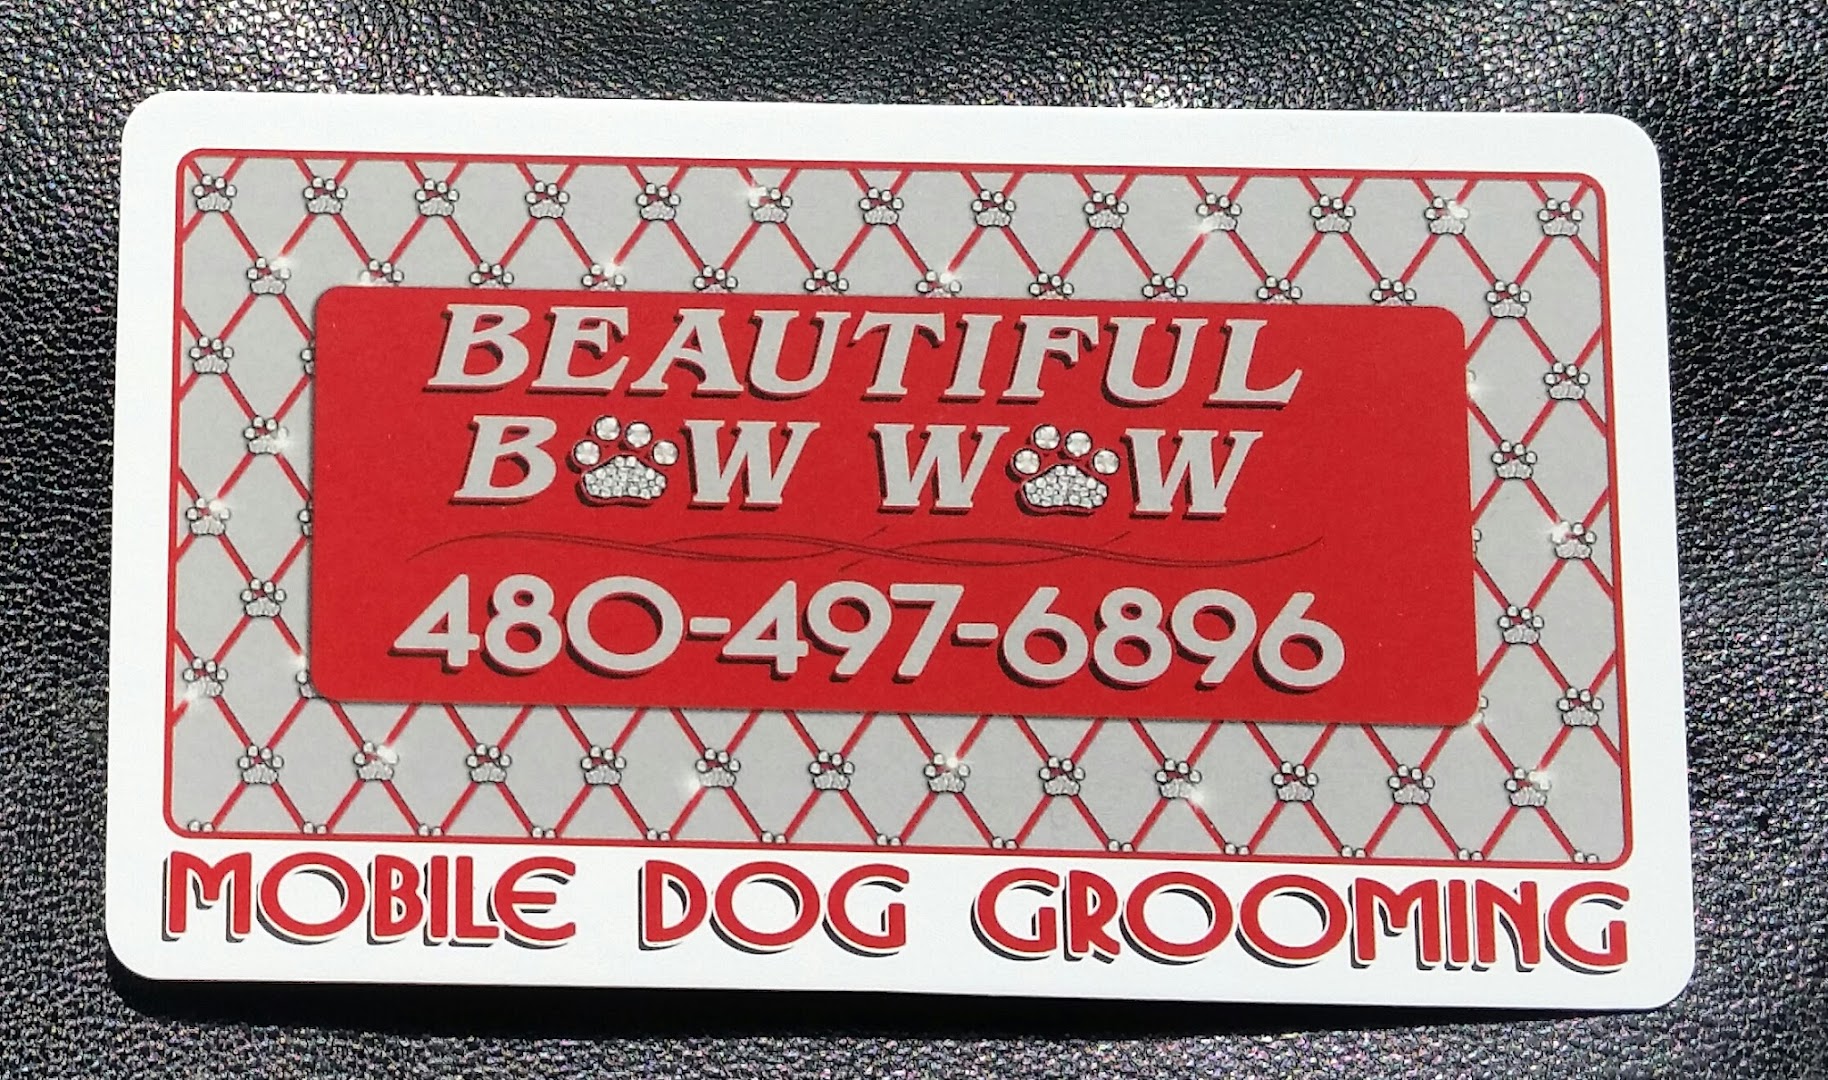 Beautiful Bow Wow Mobile Dog Grooming